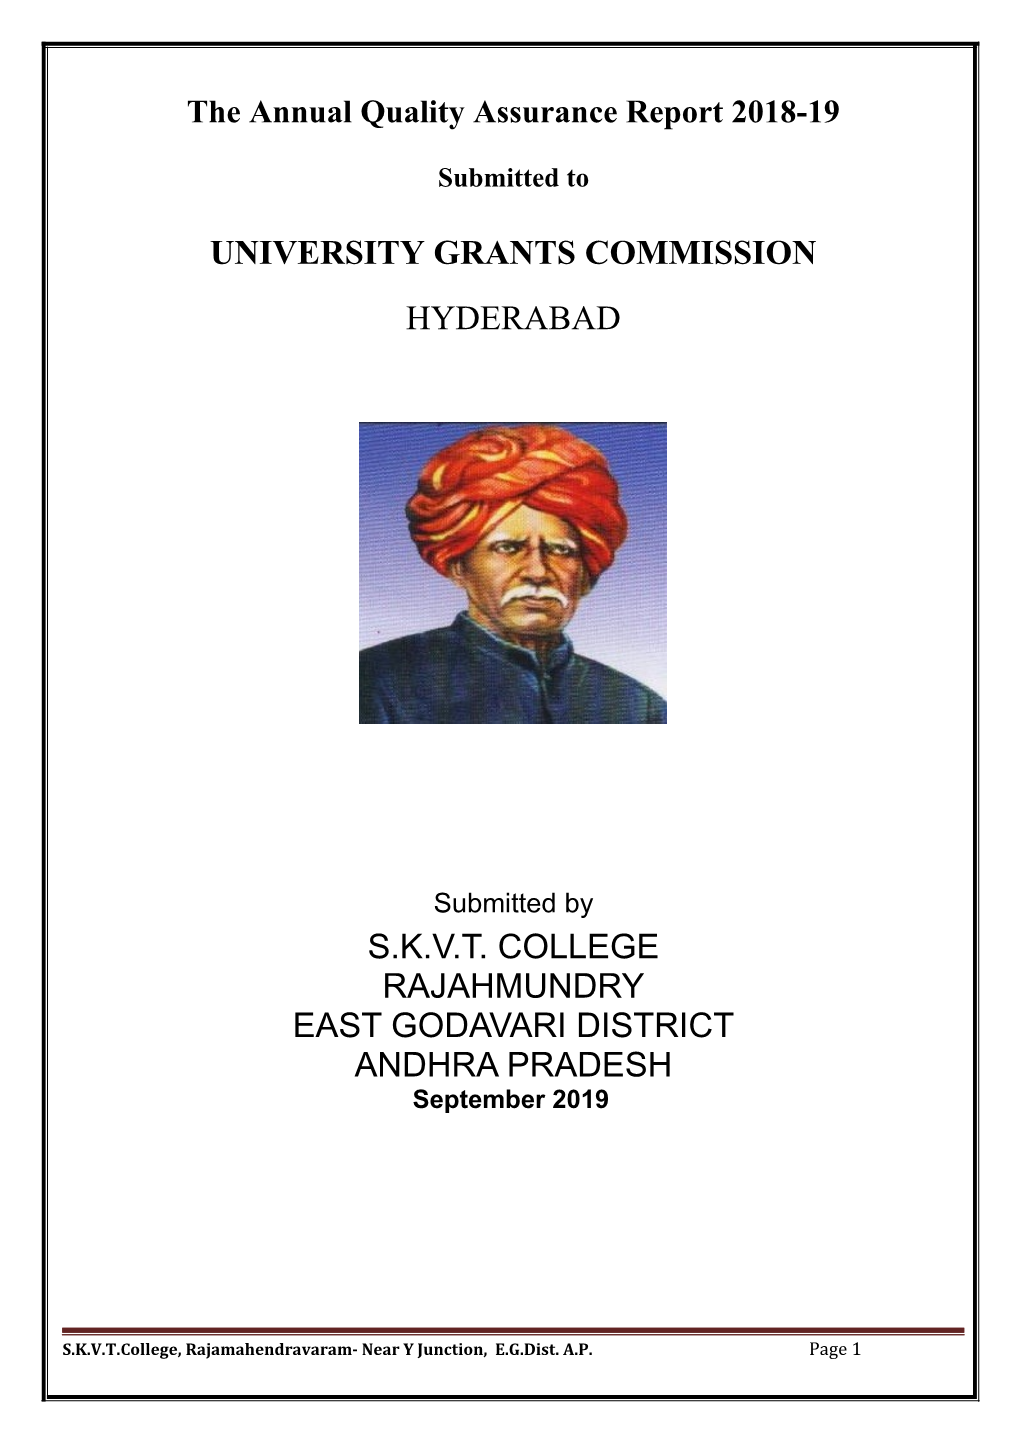 University Grants Commission Hyderabad S.K.V.T. College Rajahmundry East Godavari District Andhra Pradesh